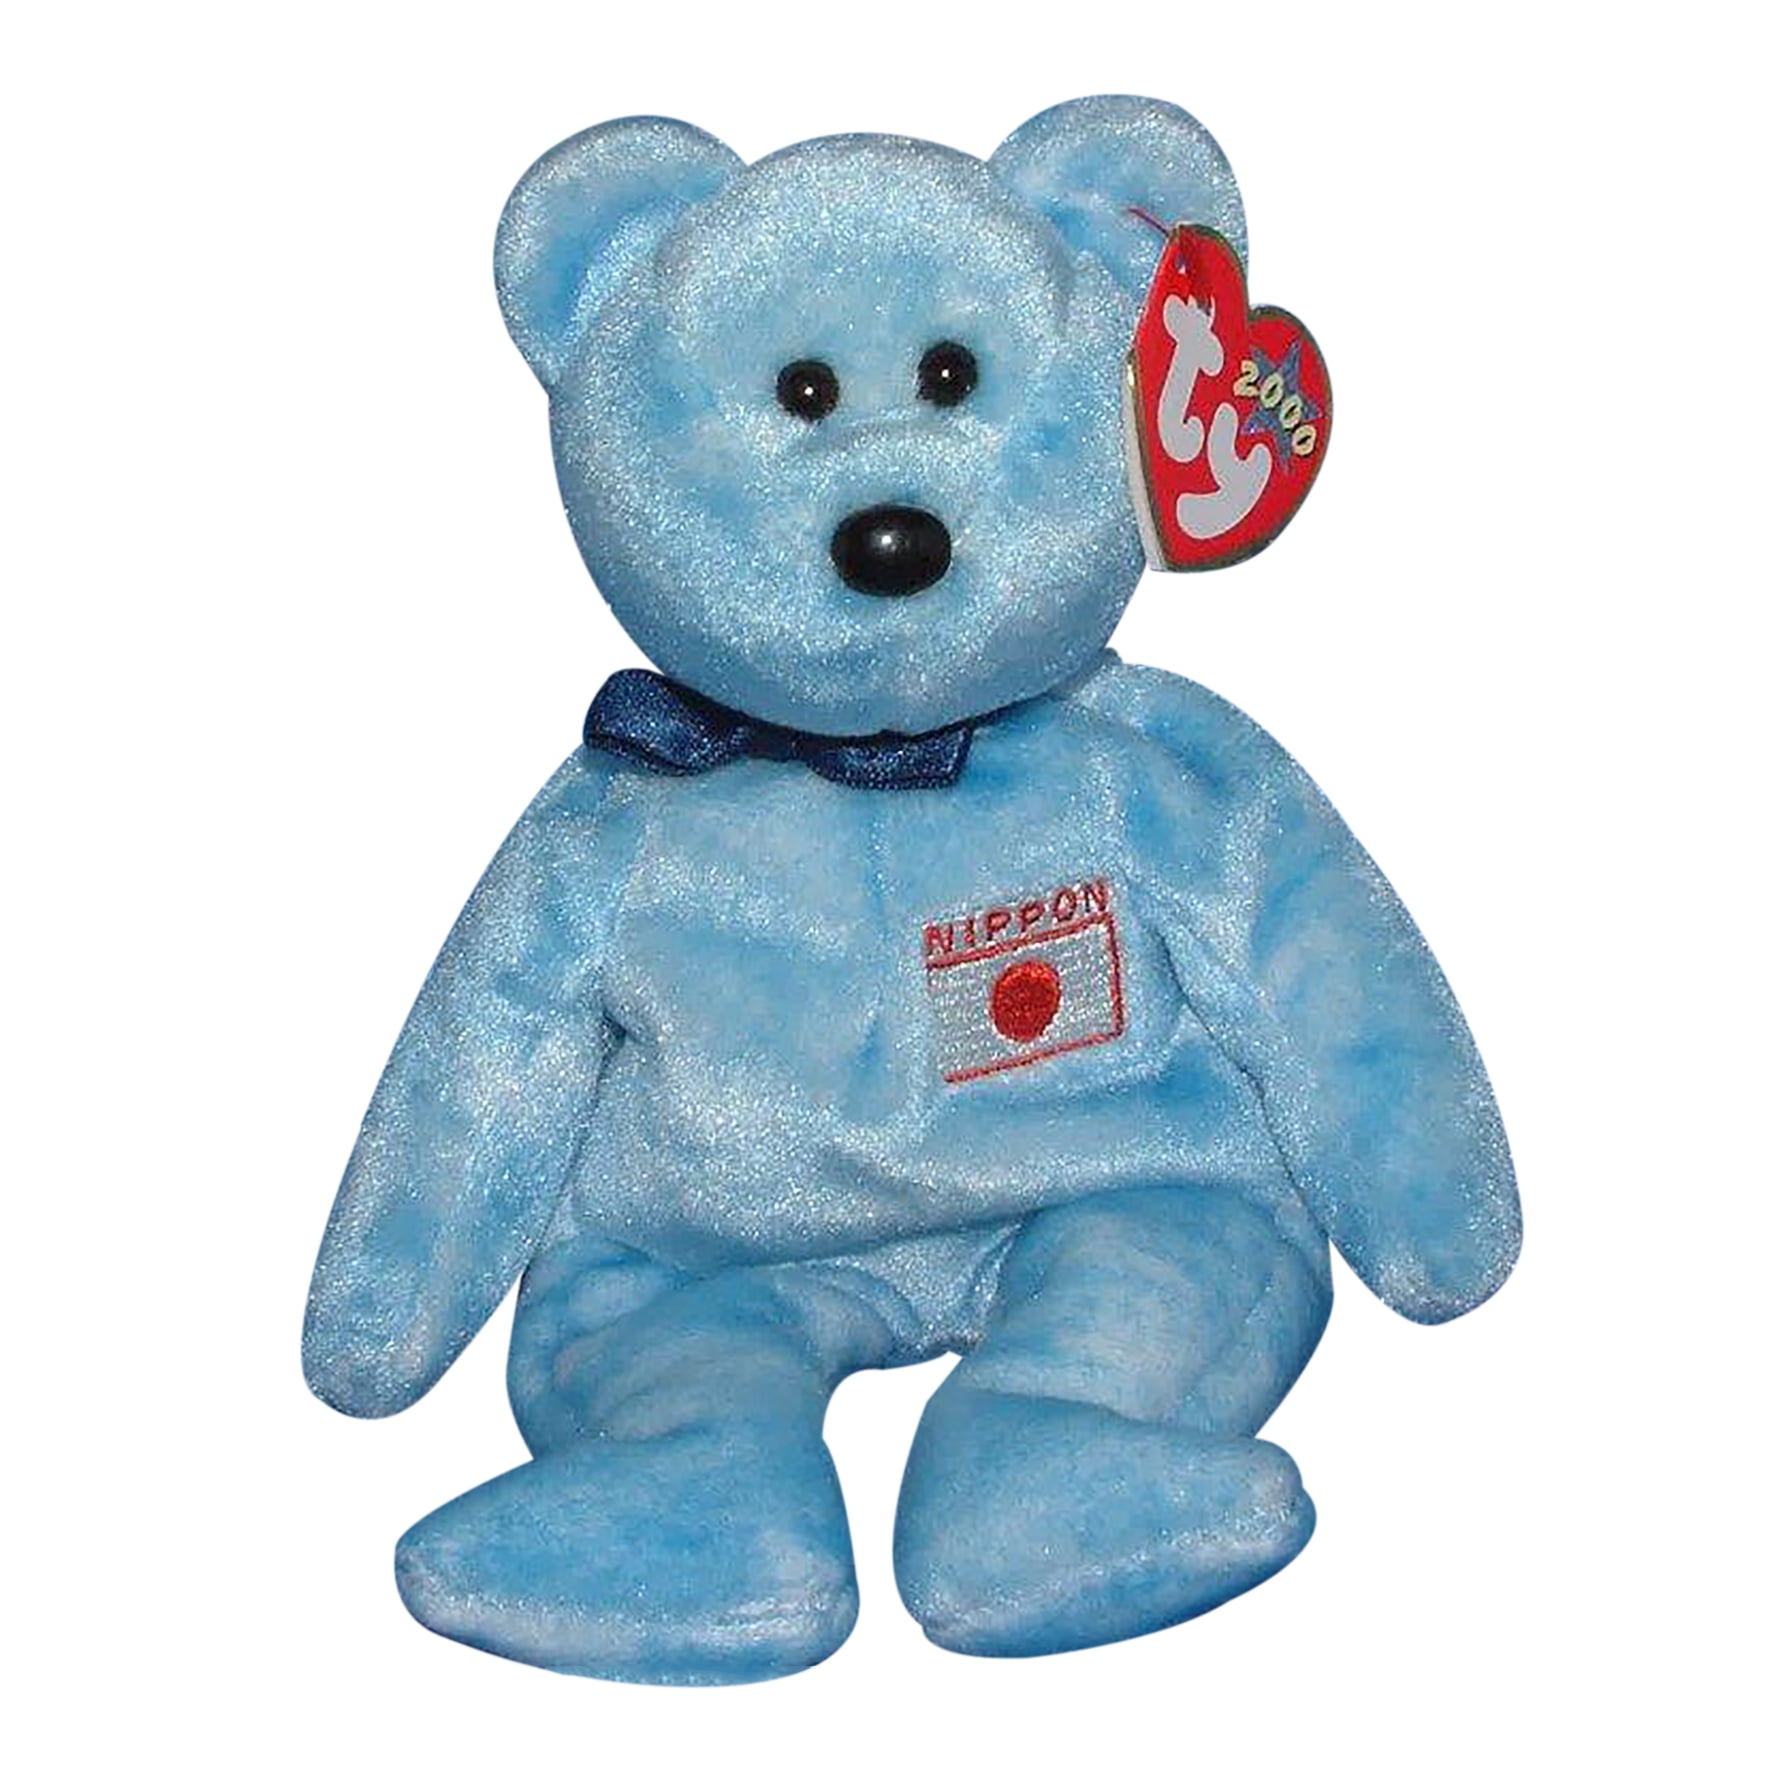 Ty Beanie Baby: Nipponia the Bear | Stuffed Animal | MWMT - Walmart.com